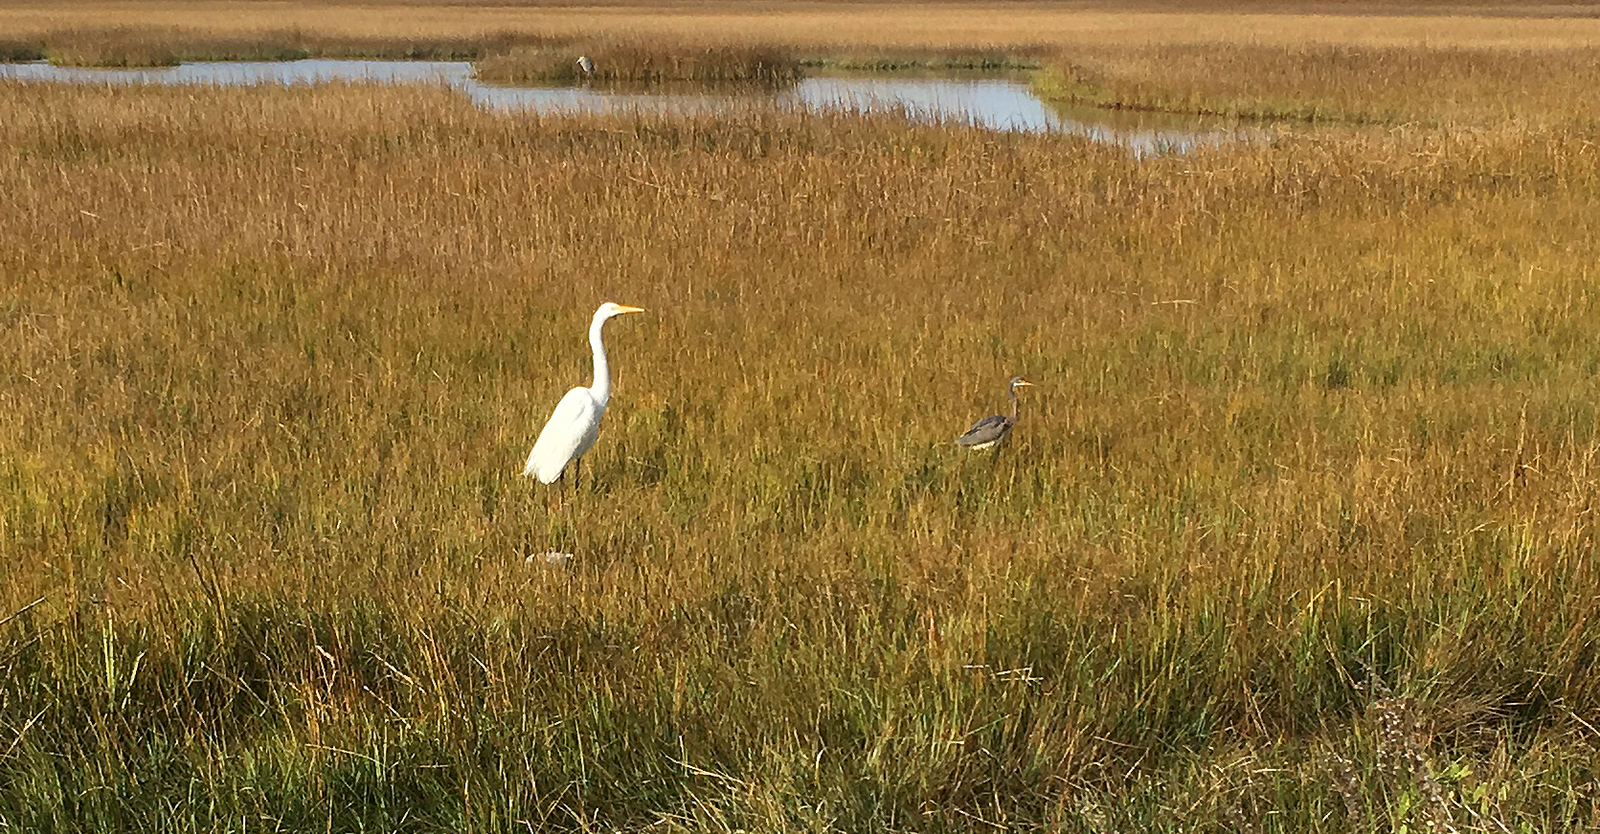 Wading birds on the Georgia coast